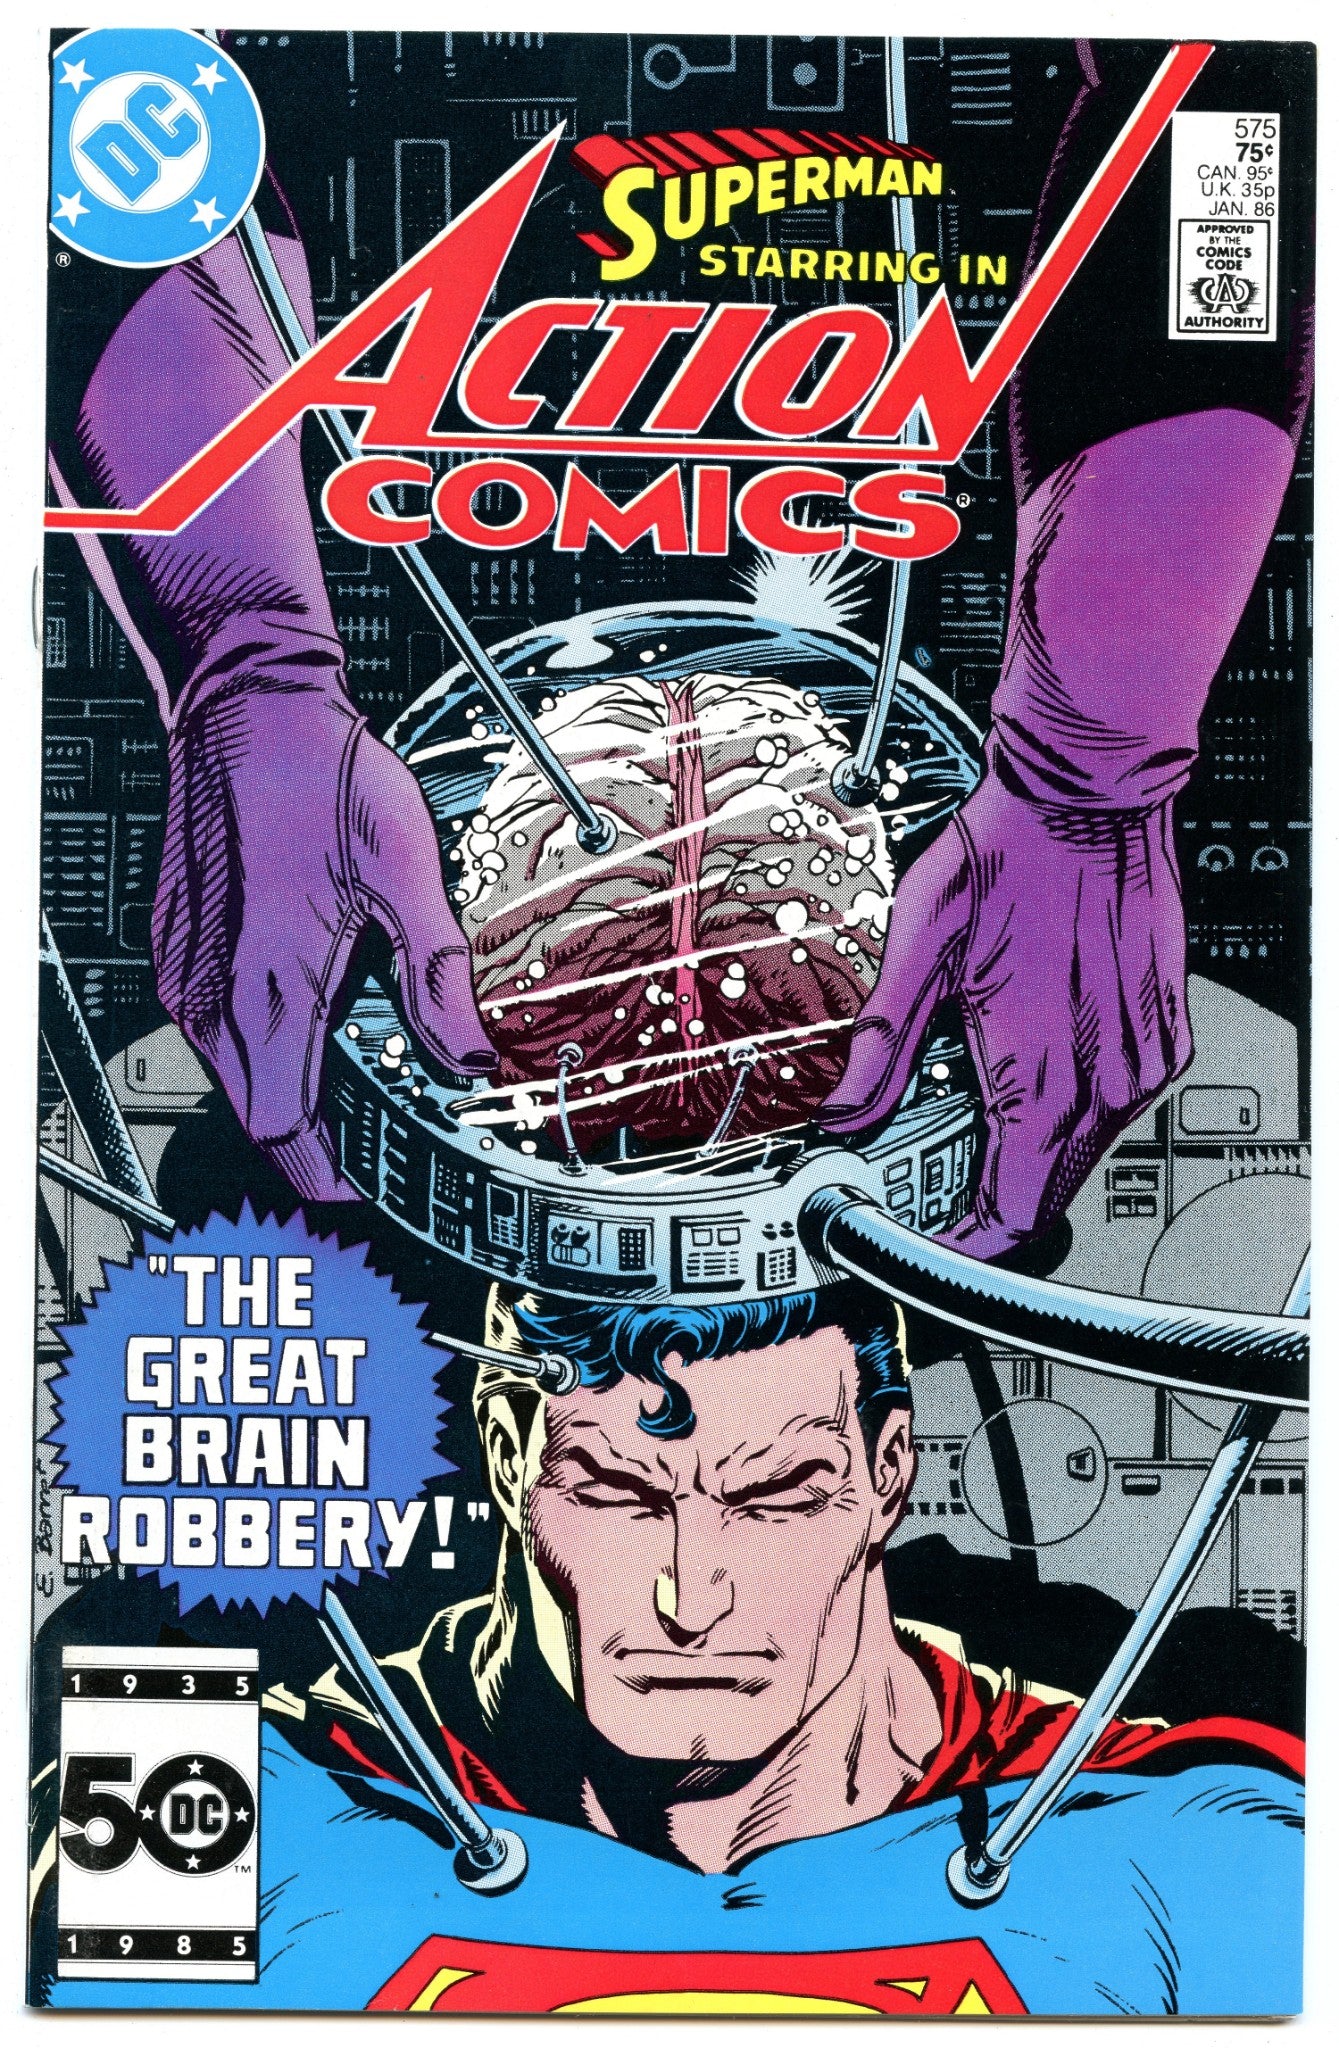 Action Comics 575 (Jan 1986) NM- (9.2)